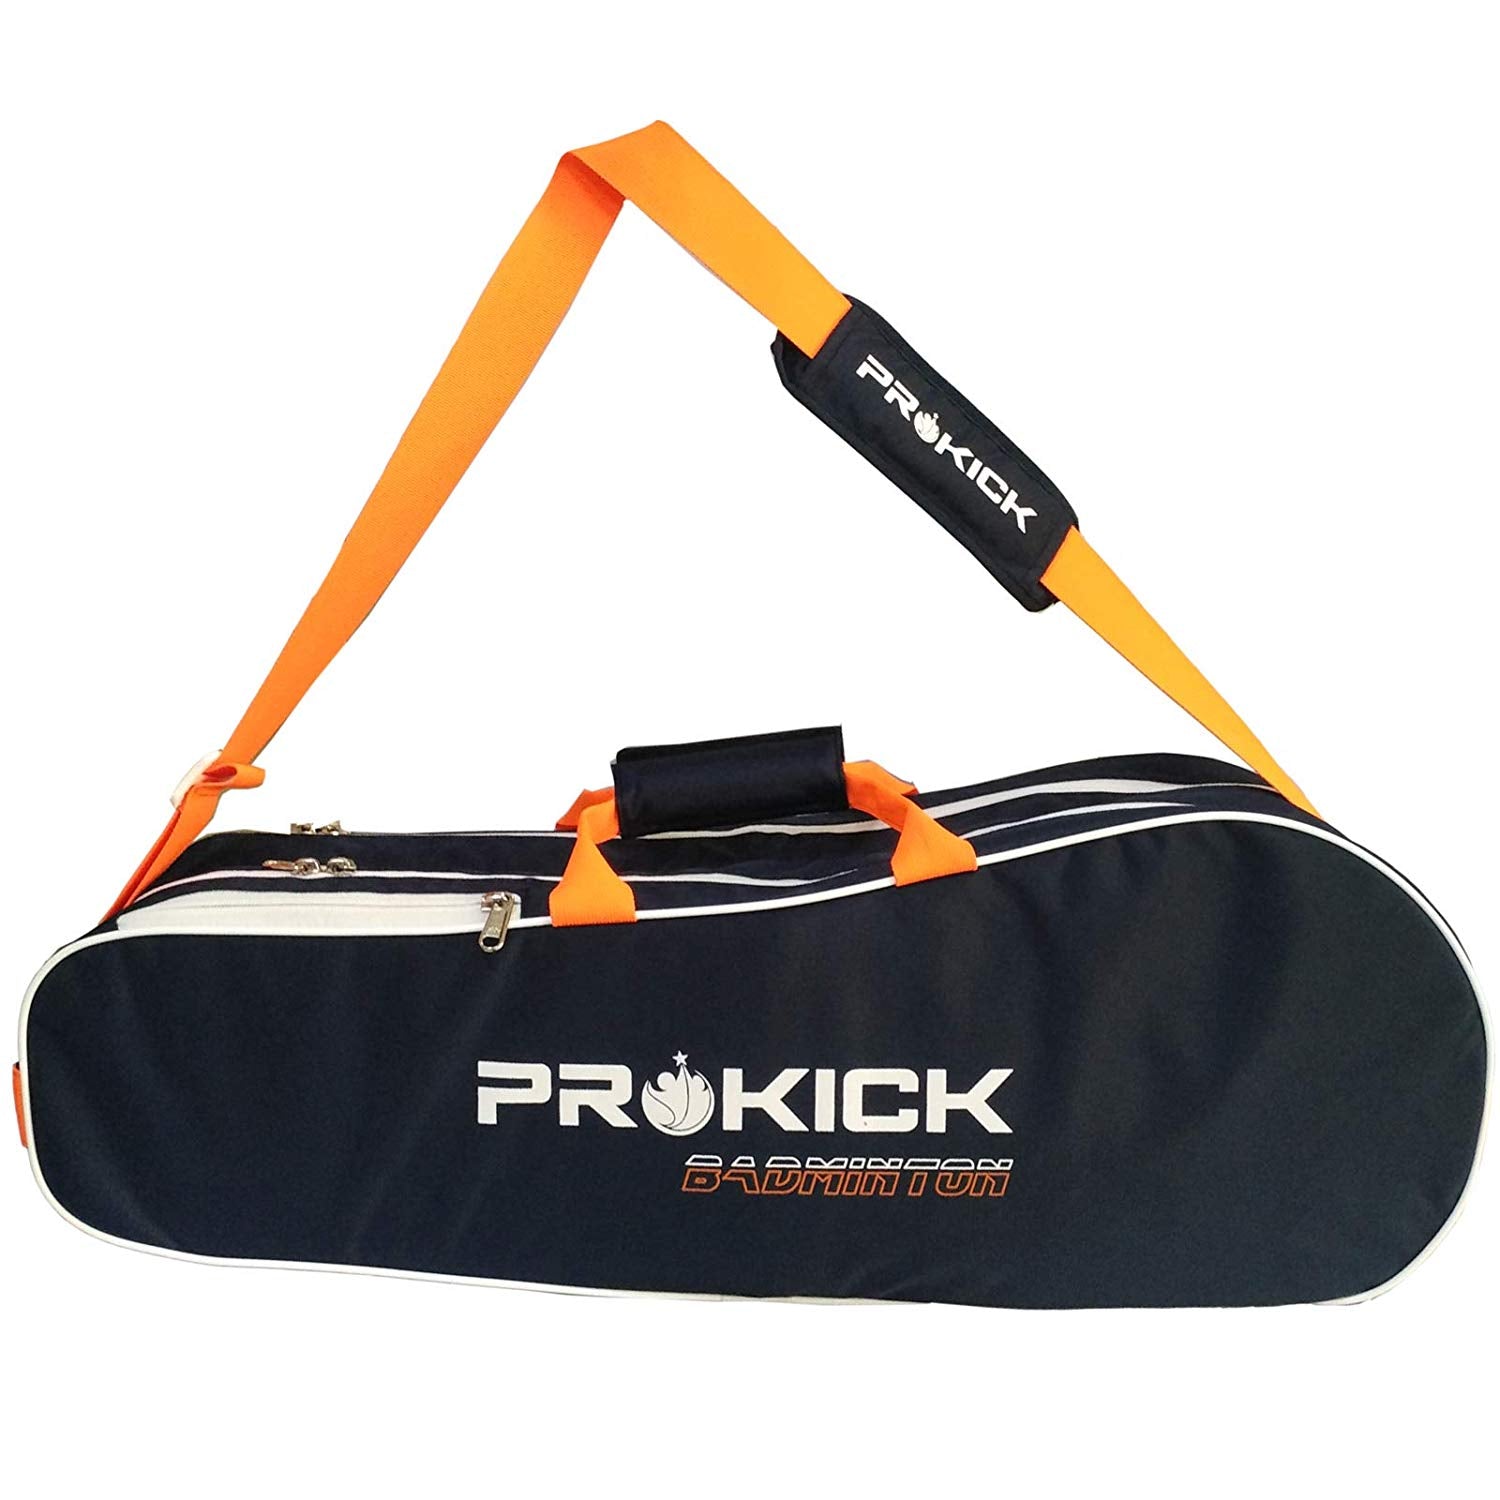 Prokick Neon Series Badminton Kitbag with Double Zipper Compartments - Best Price online Prokicksports.com